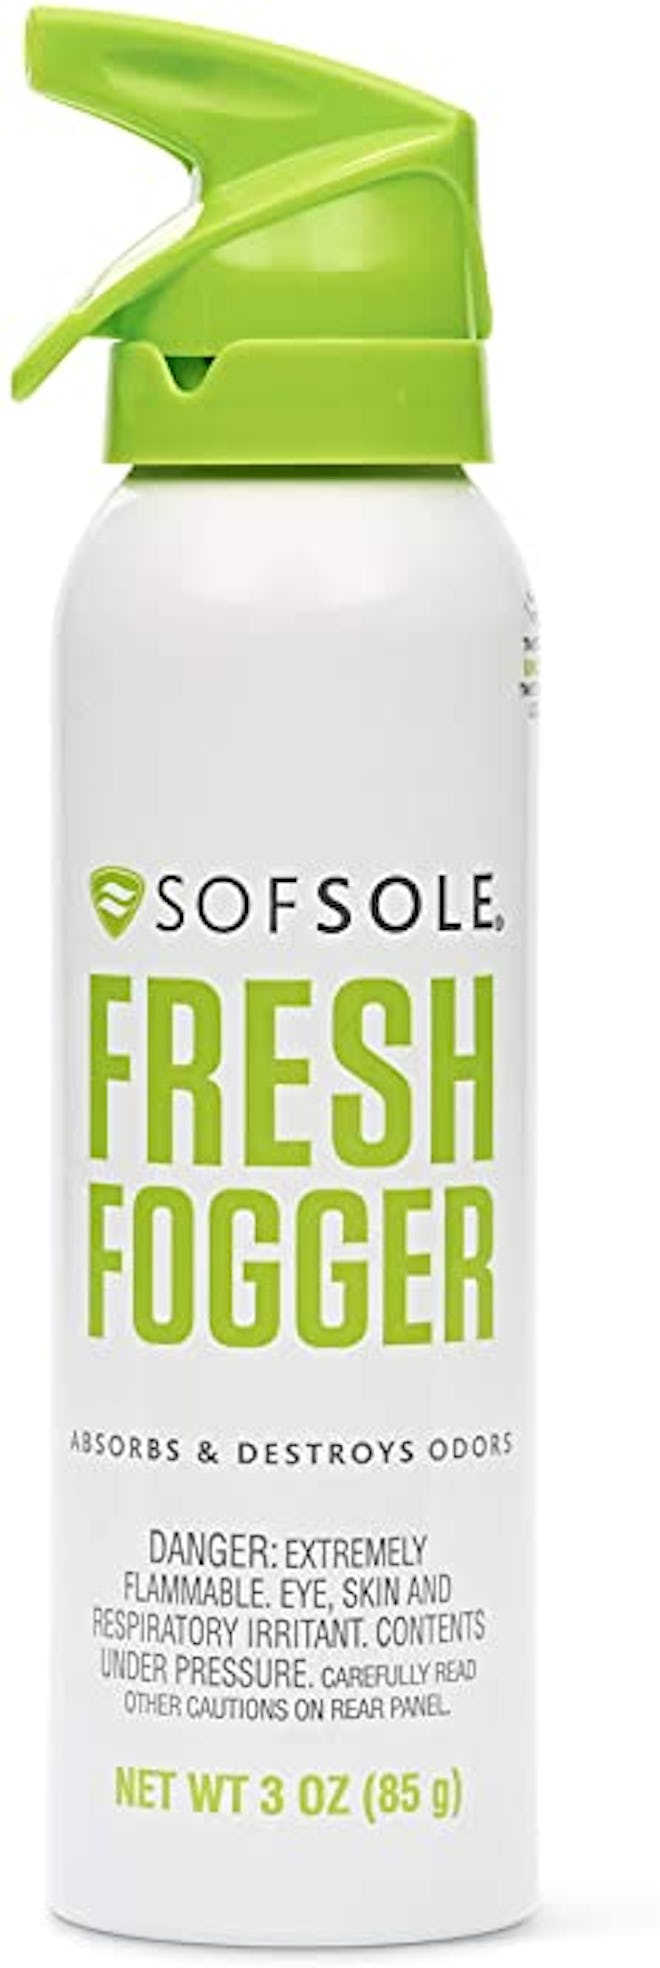 Sof Sole Fresh Fogger (2-Pack)